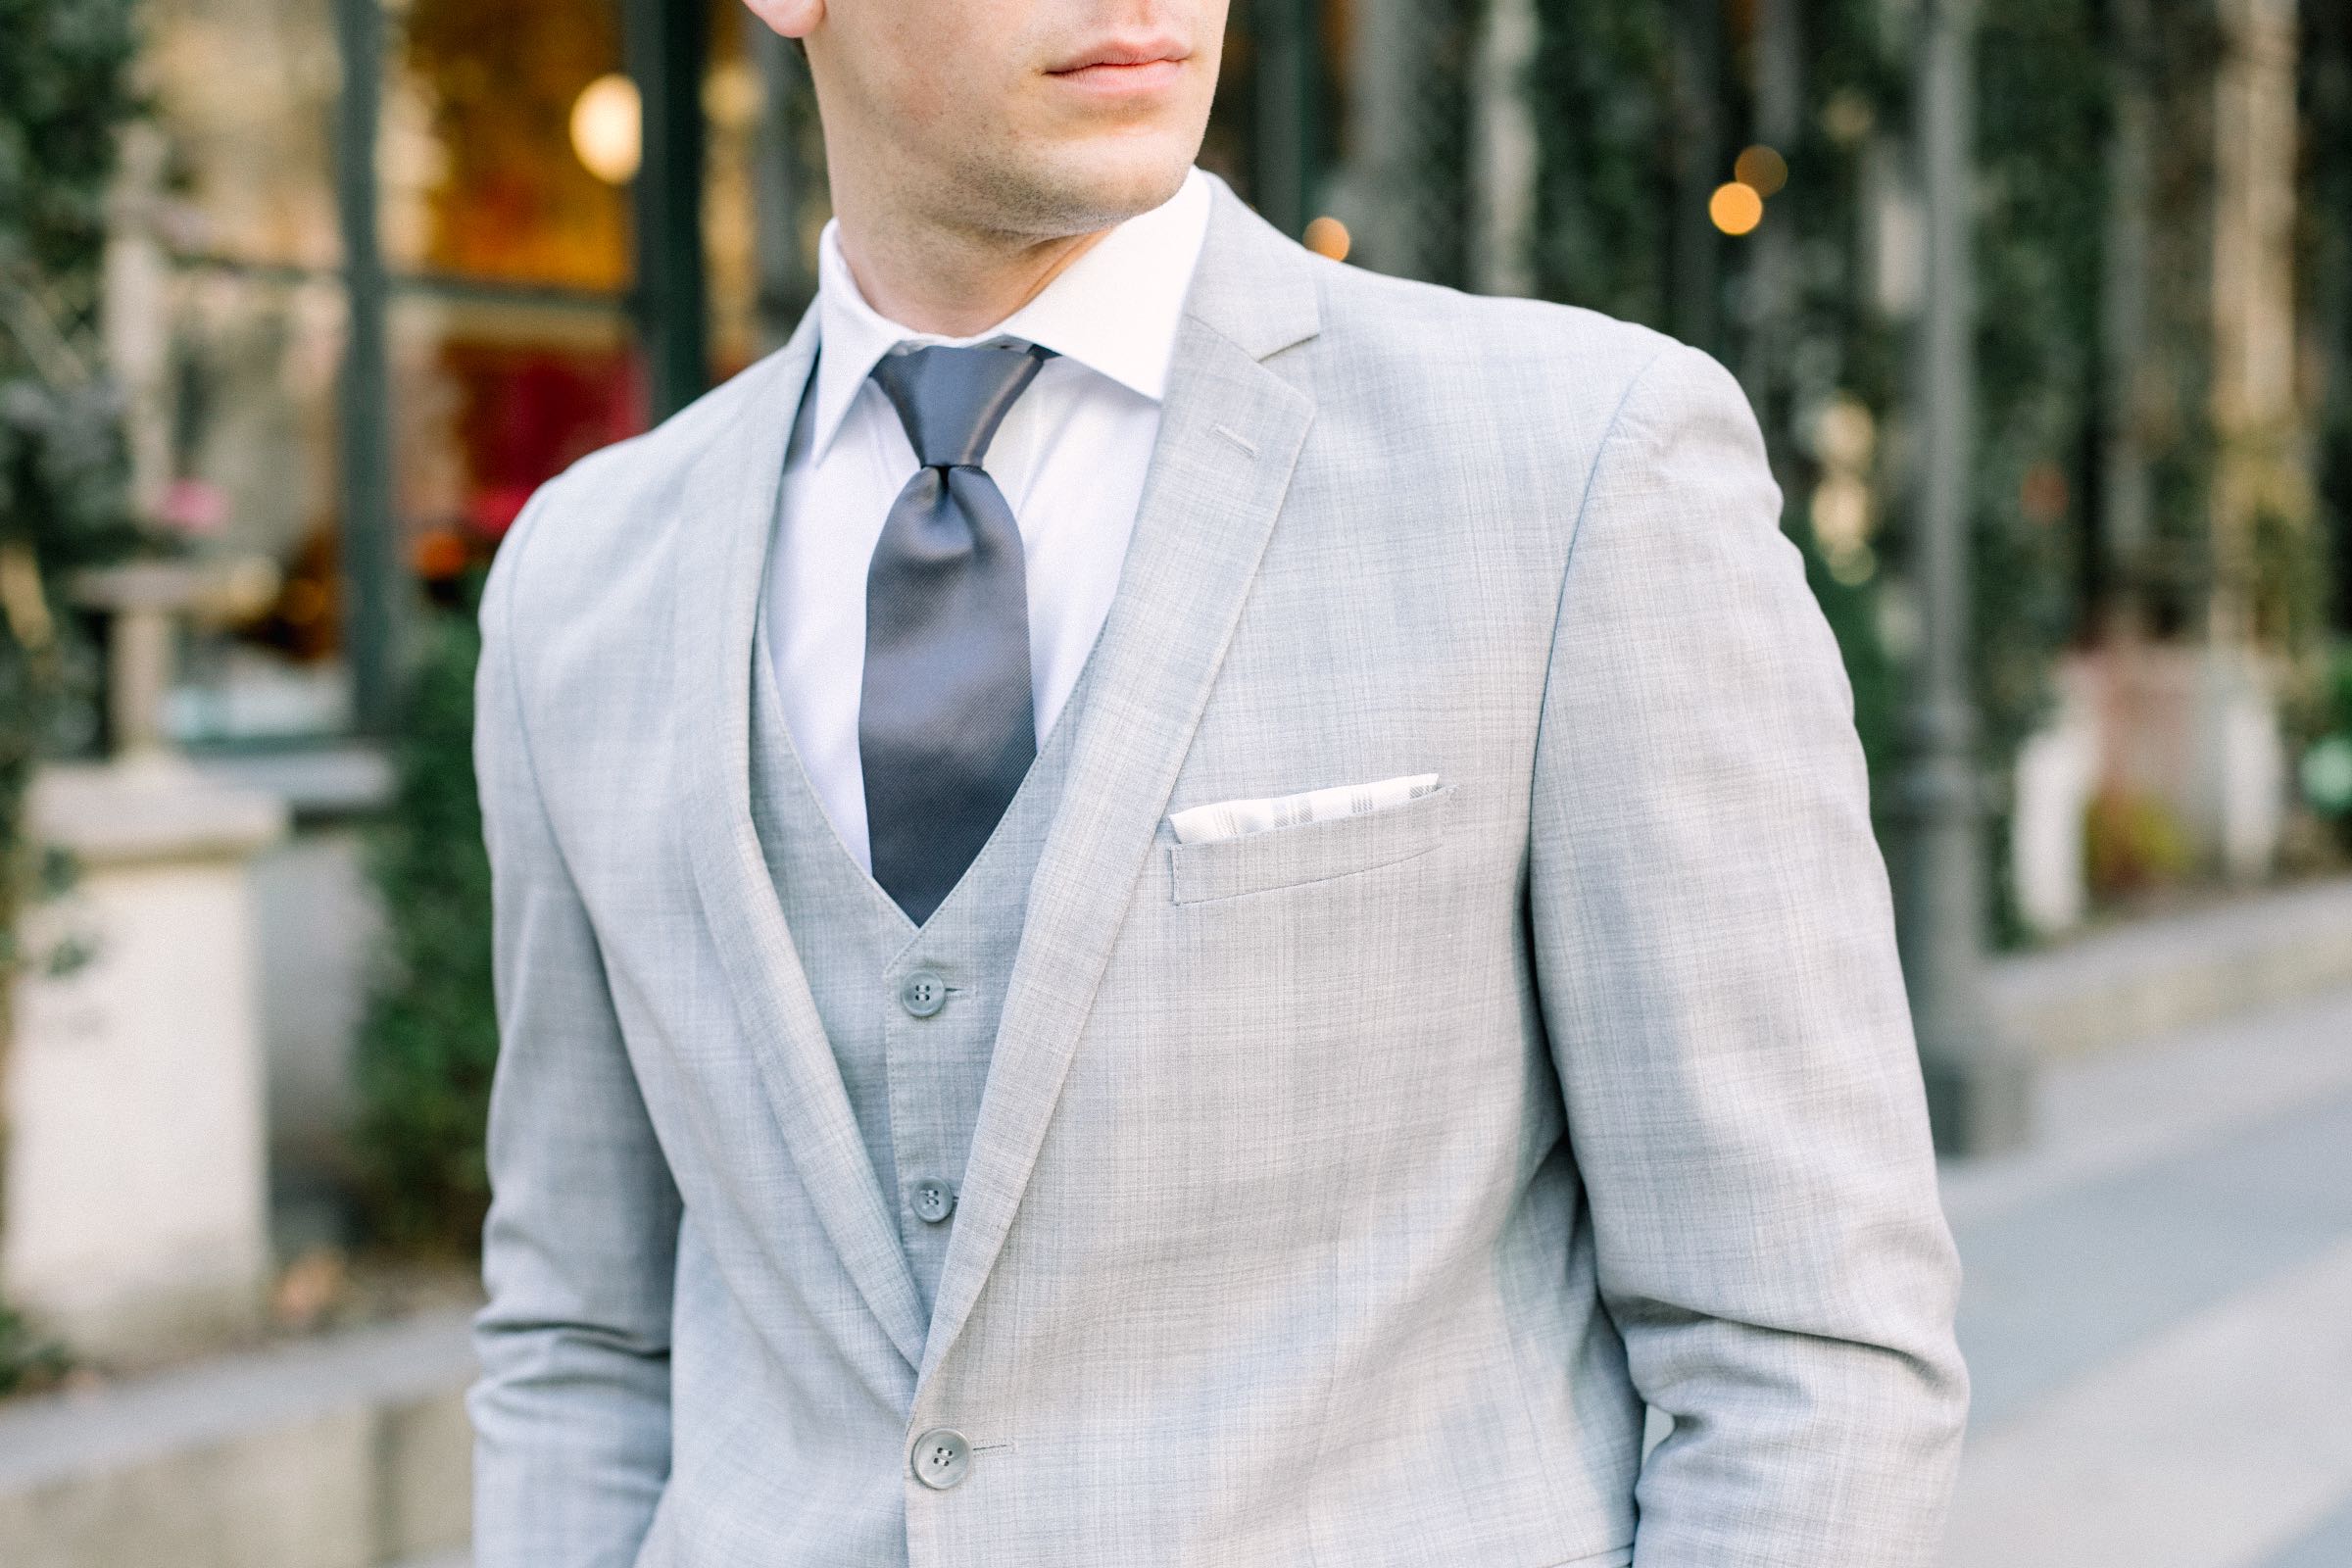 Men's Light Grey Suit  Suits for Weddings & Events